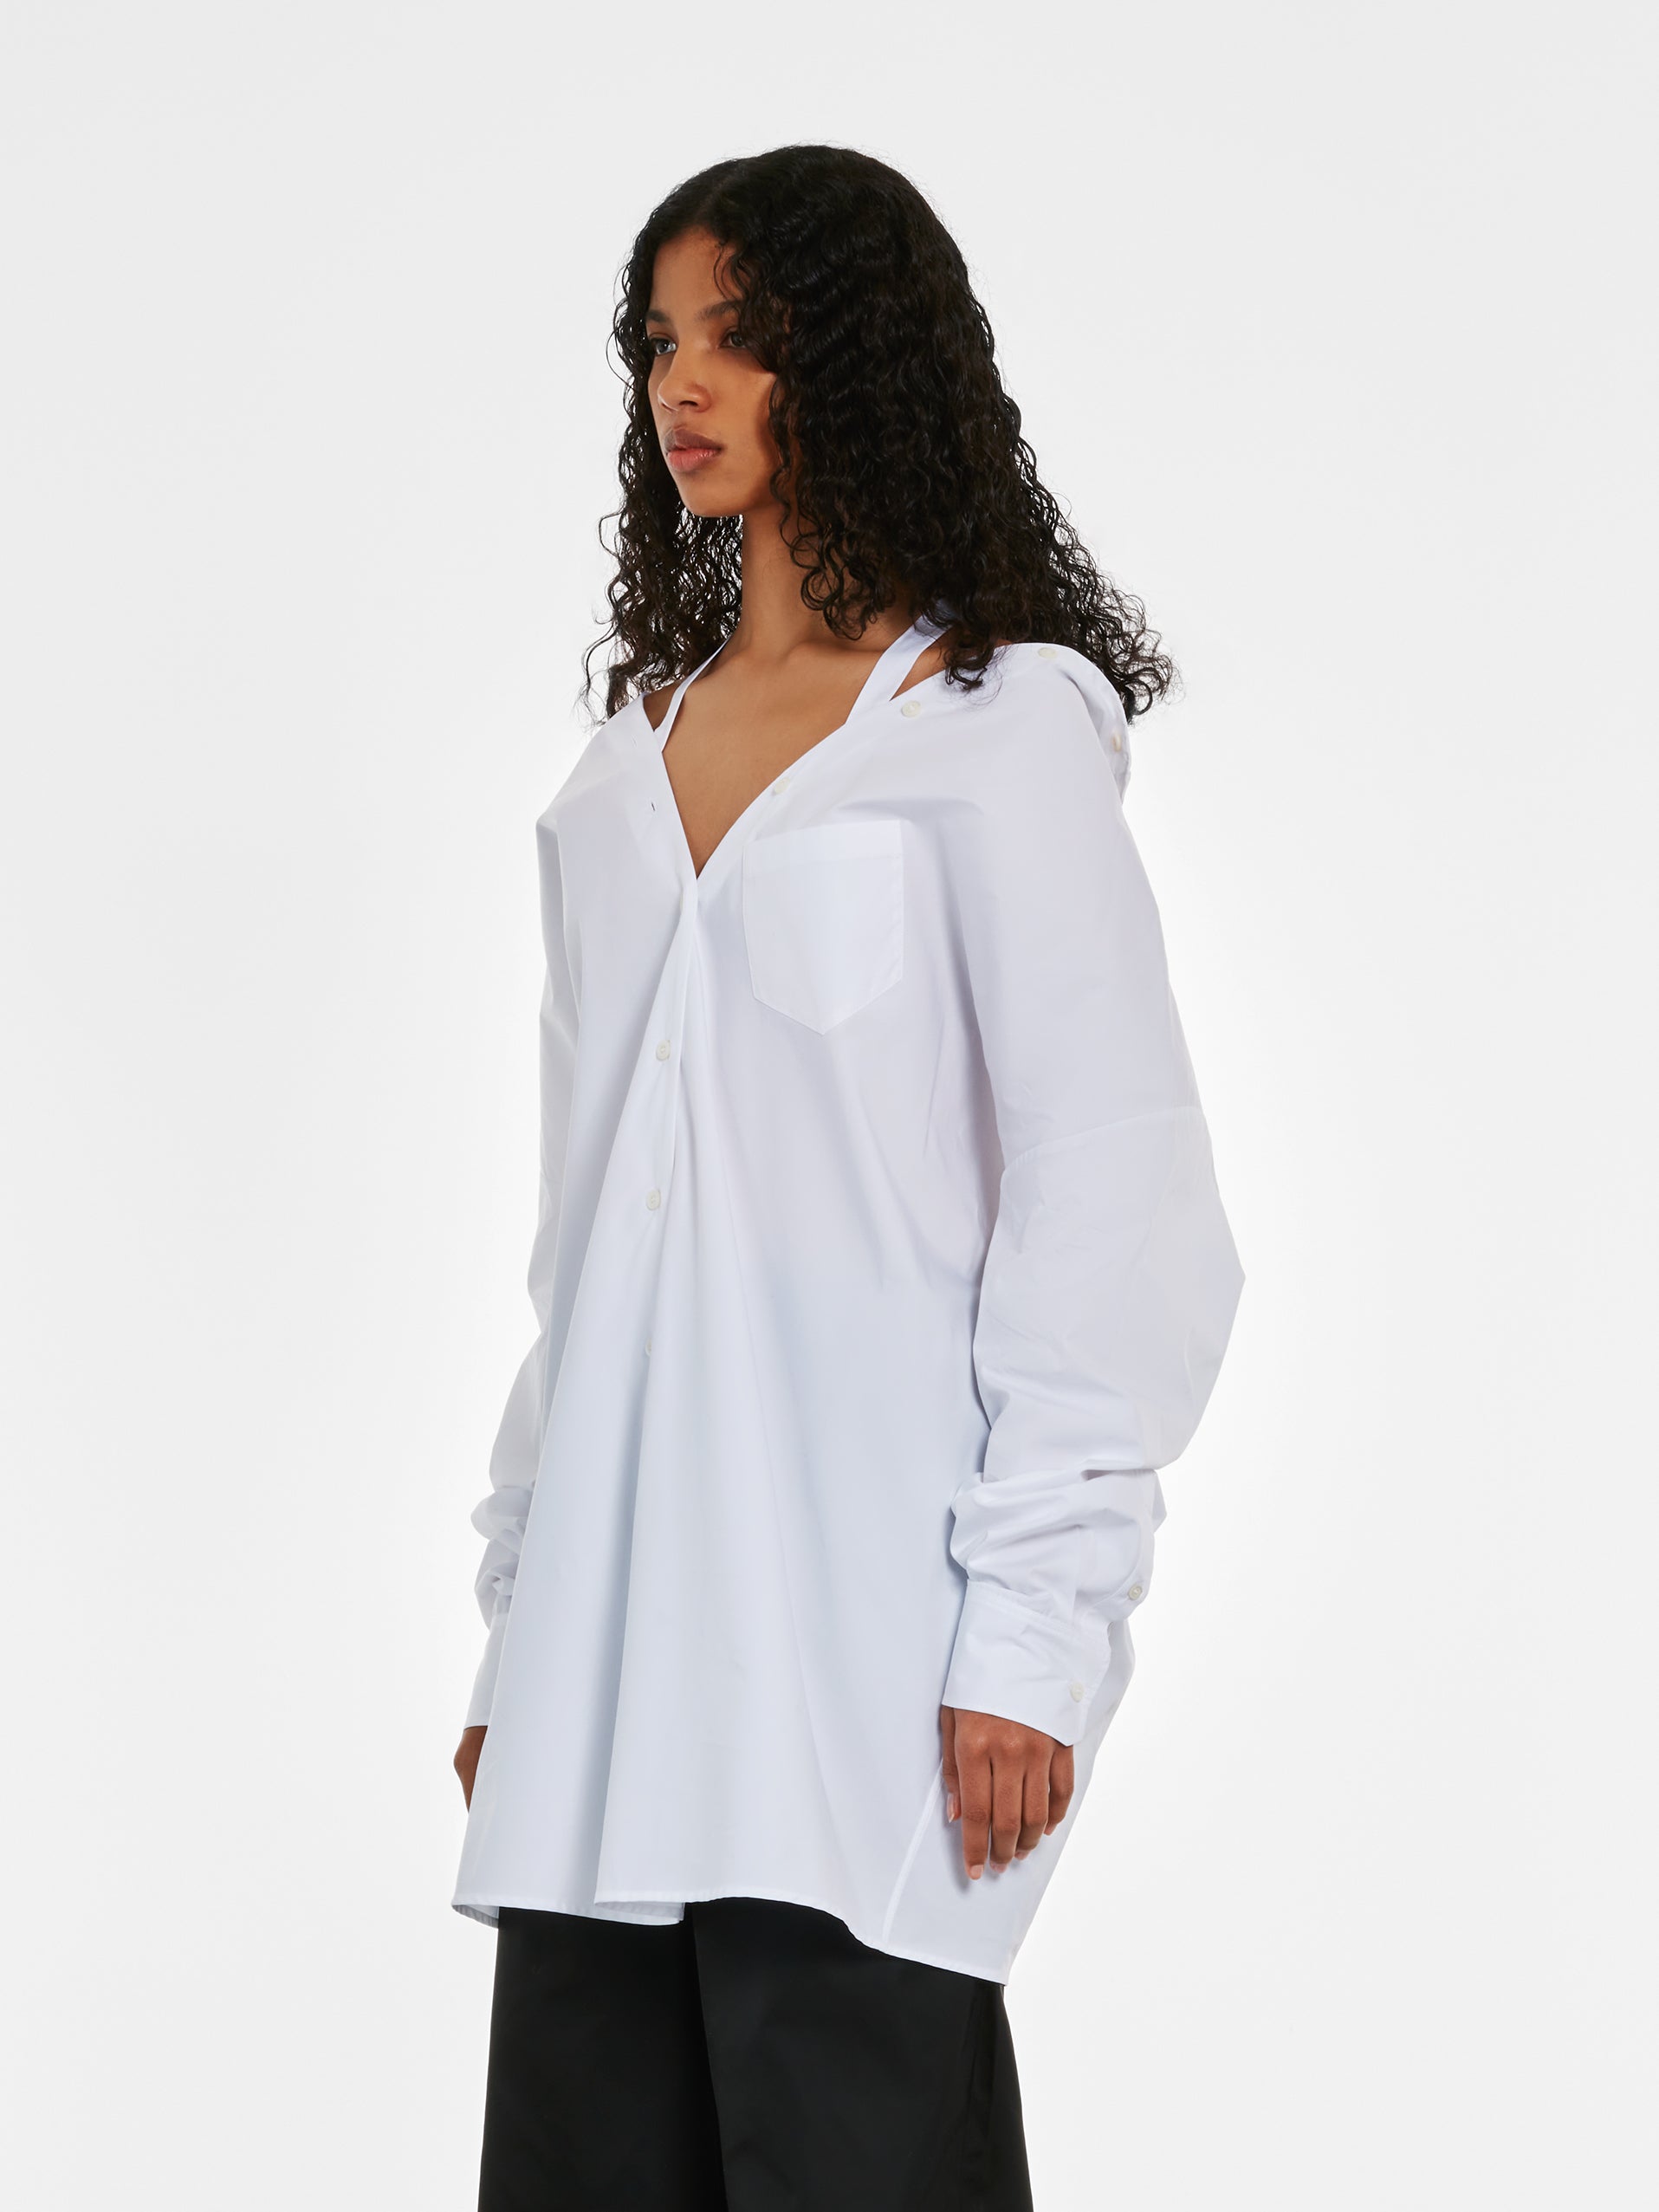 Prada - Women’s Cotton Dress - (White) view 3